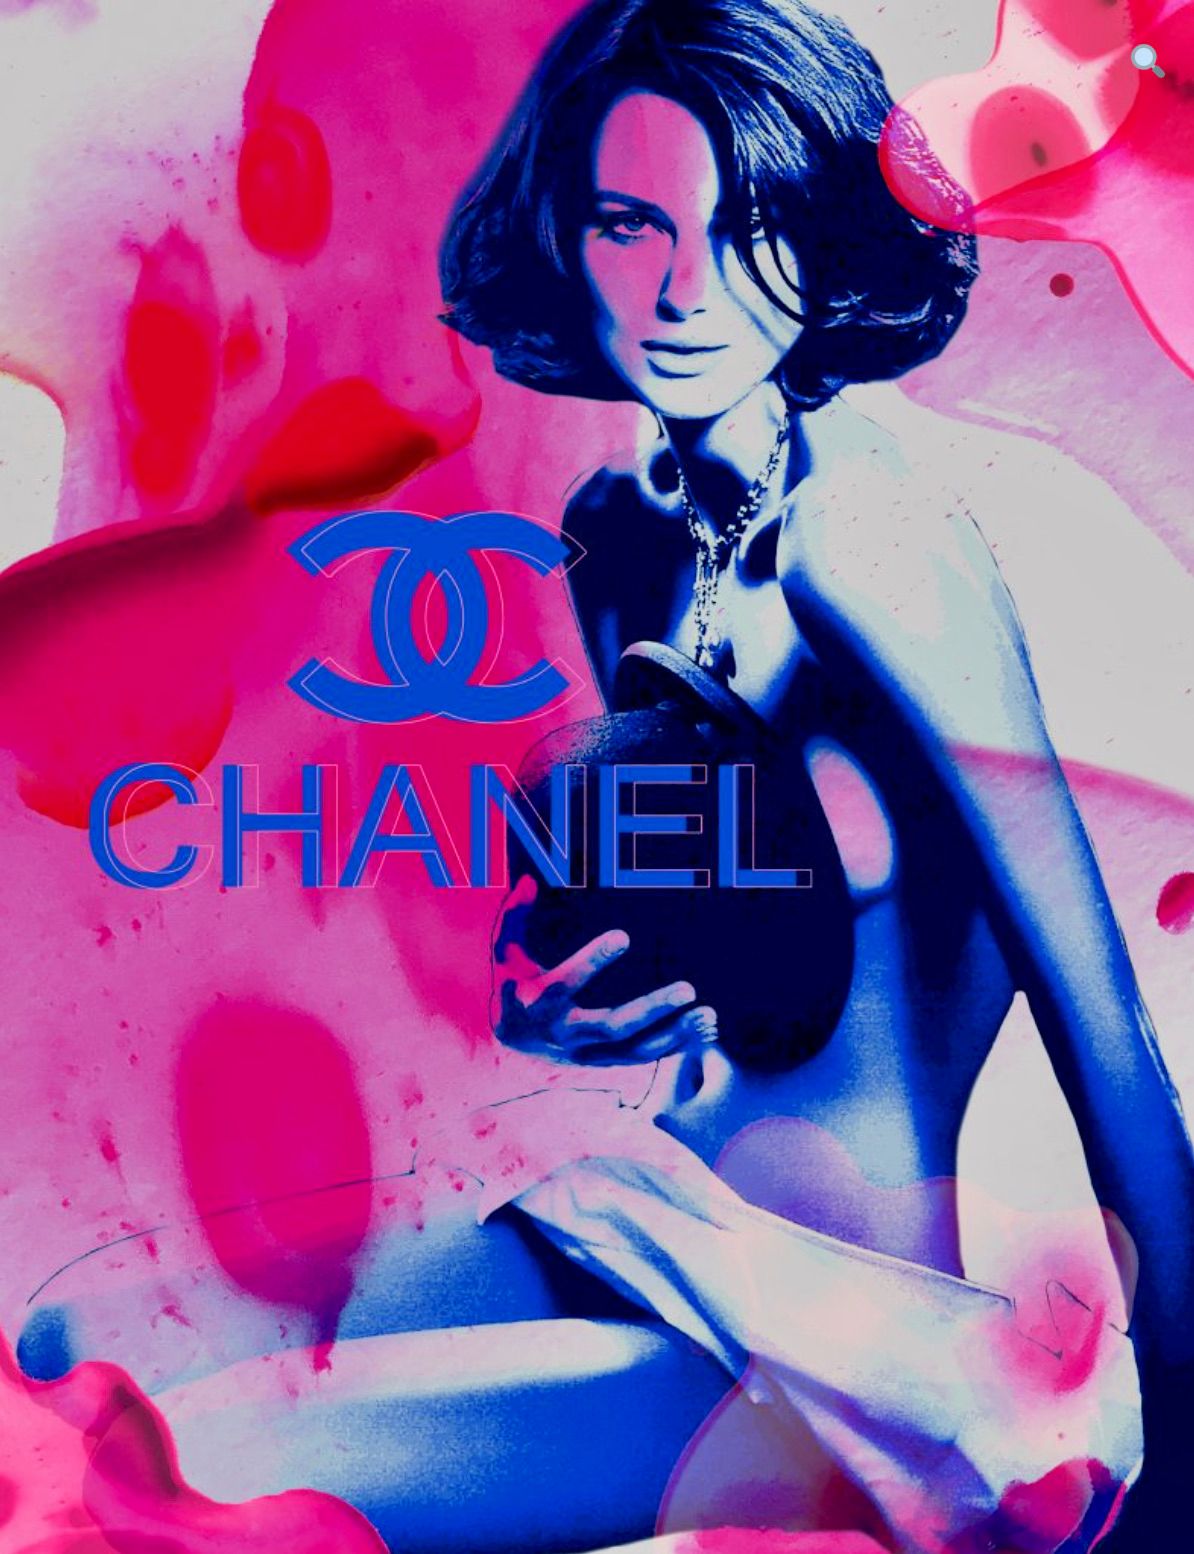 Nathali von Kretschmann abstract collage Keira Knightley nude overlay Chanel logo pink colour